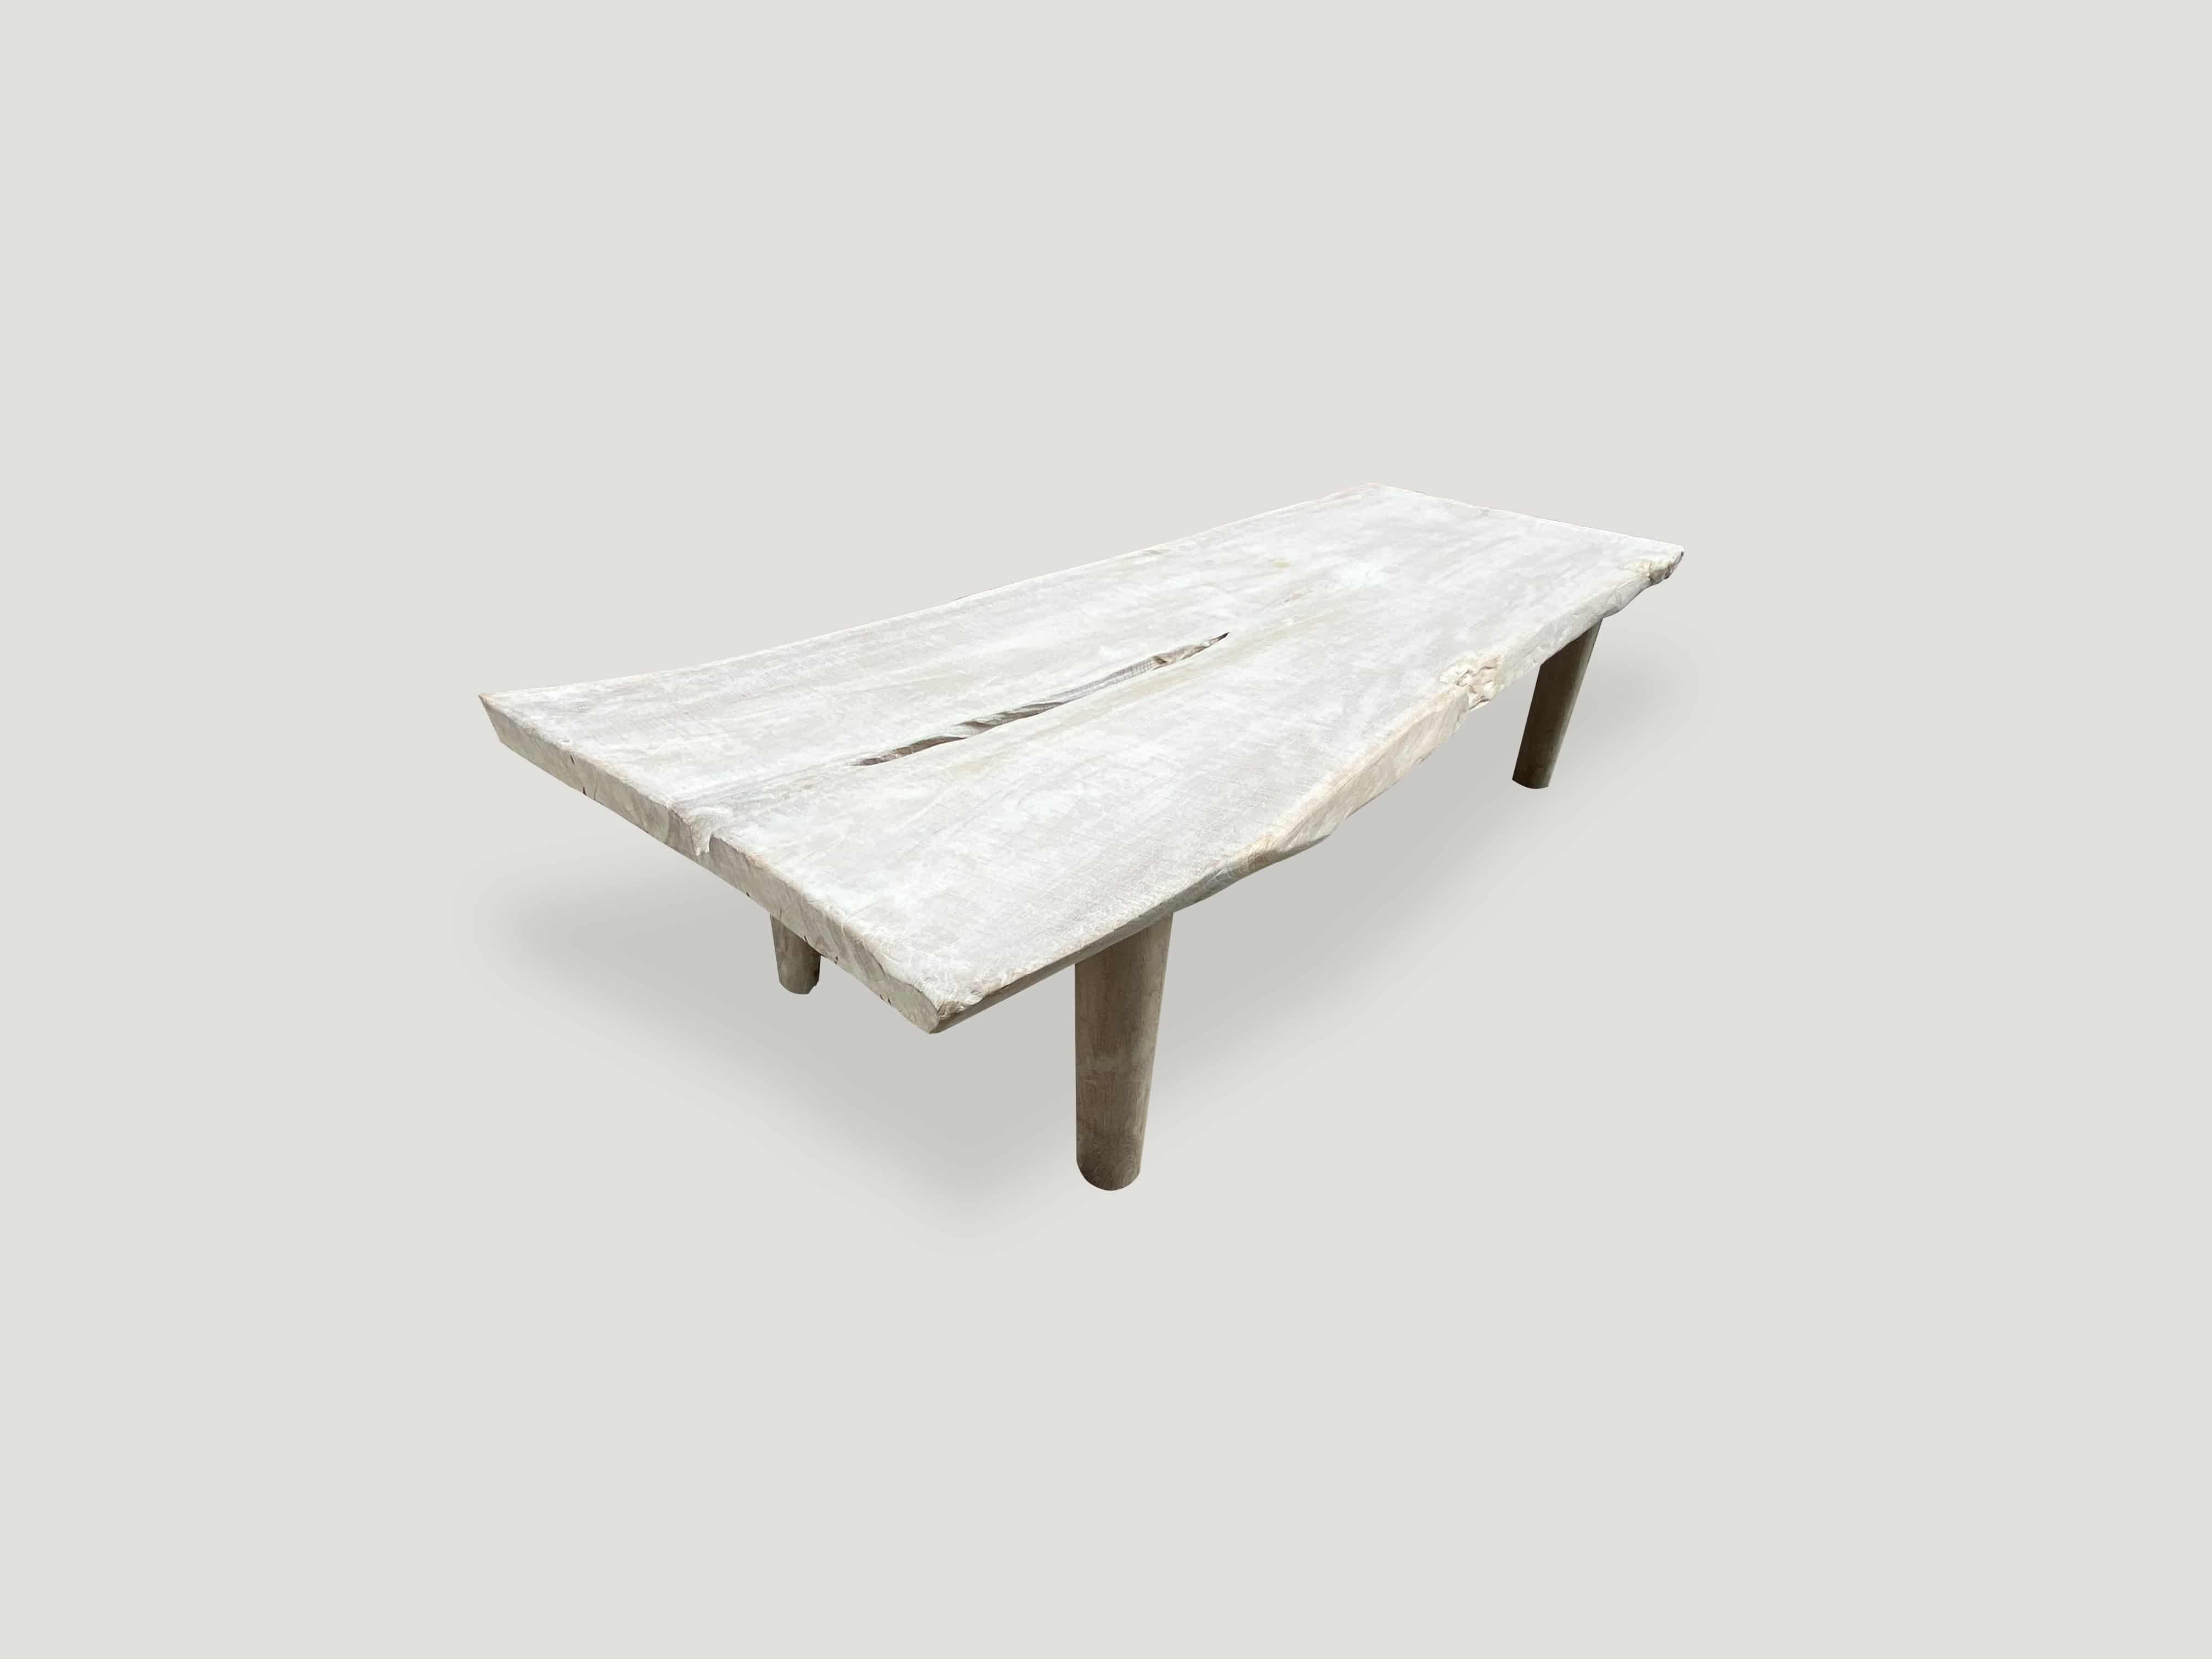 live edge single panel, reclaimed teak wood bench or coffee table